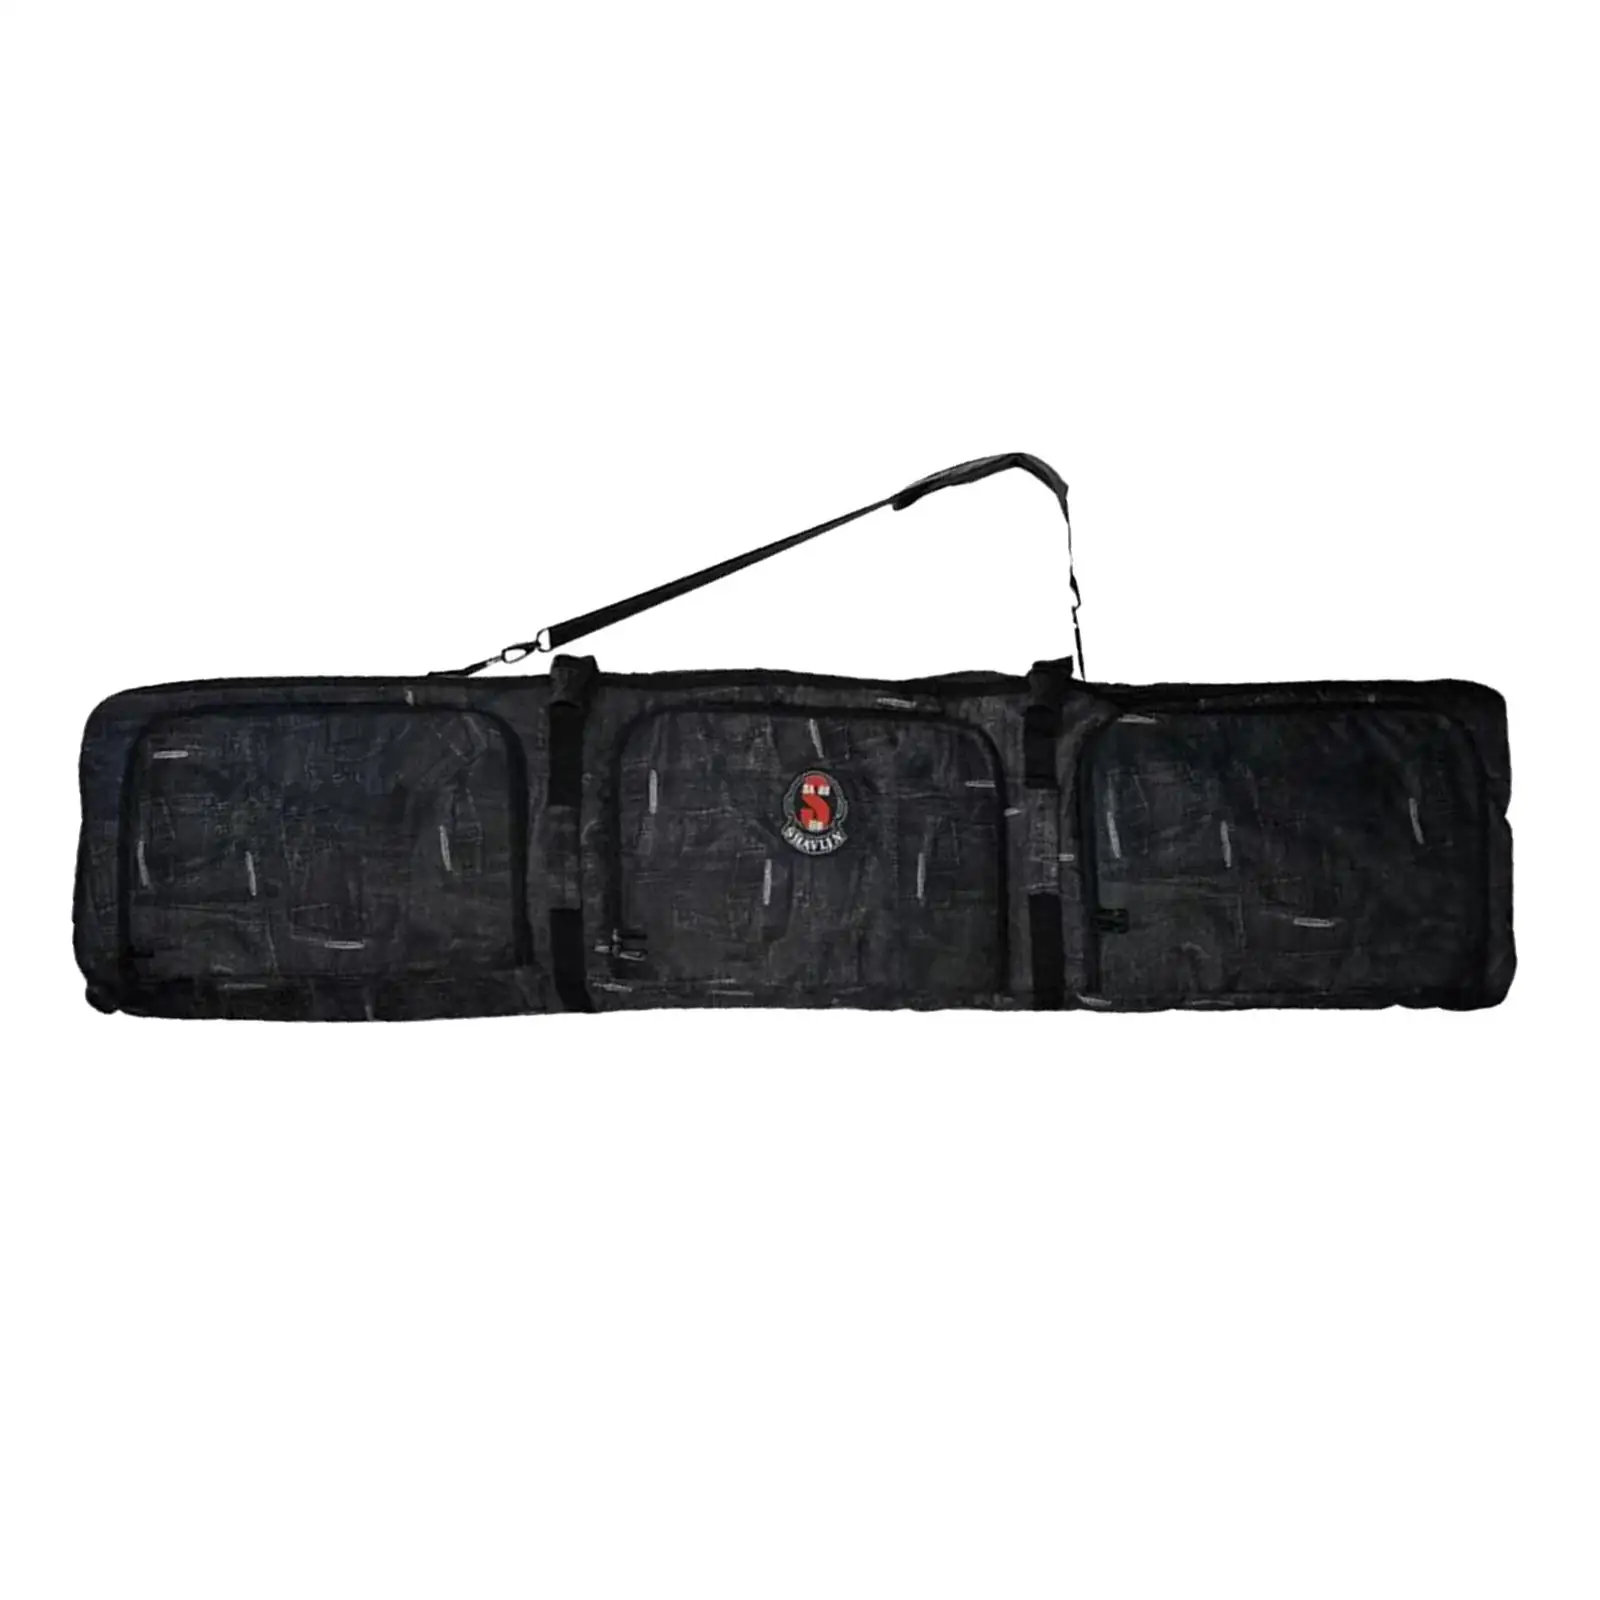 Snowboard Bag with Wheels Heavy Duty Carrying Bag Luggage Ski Storage Bag